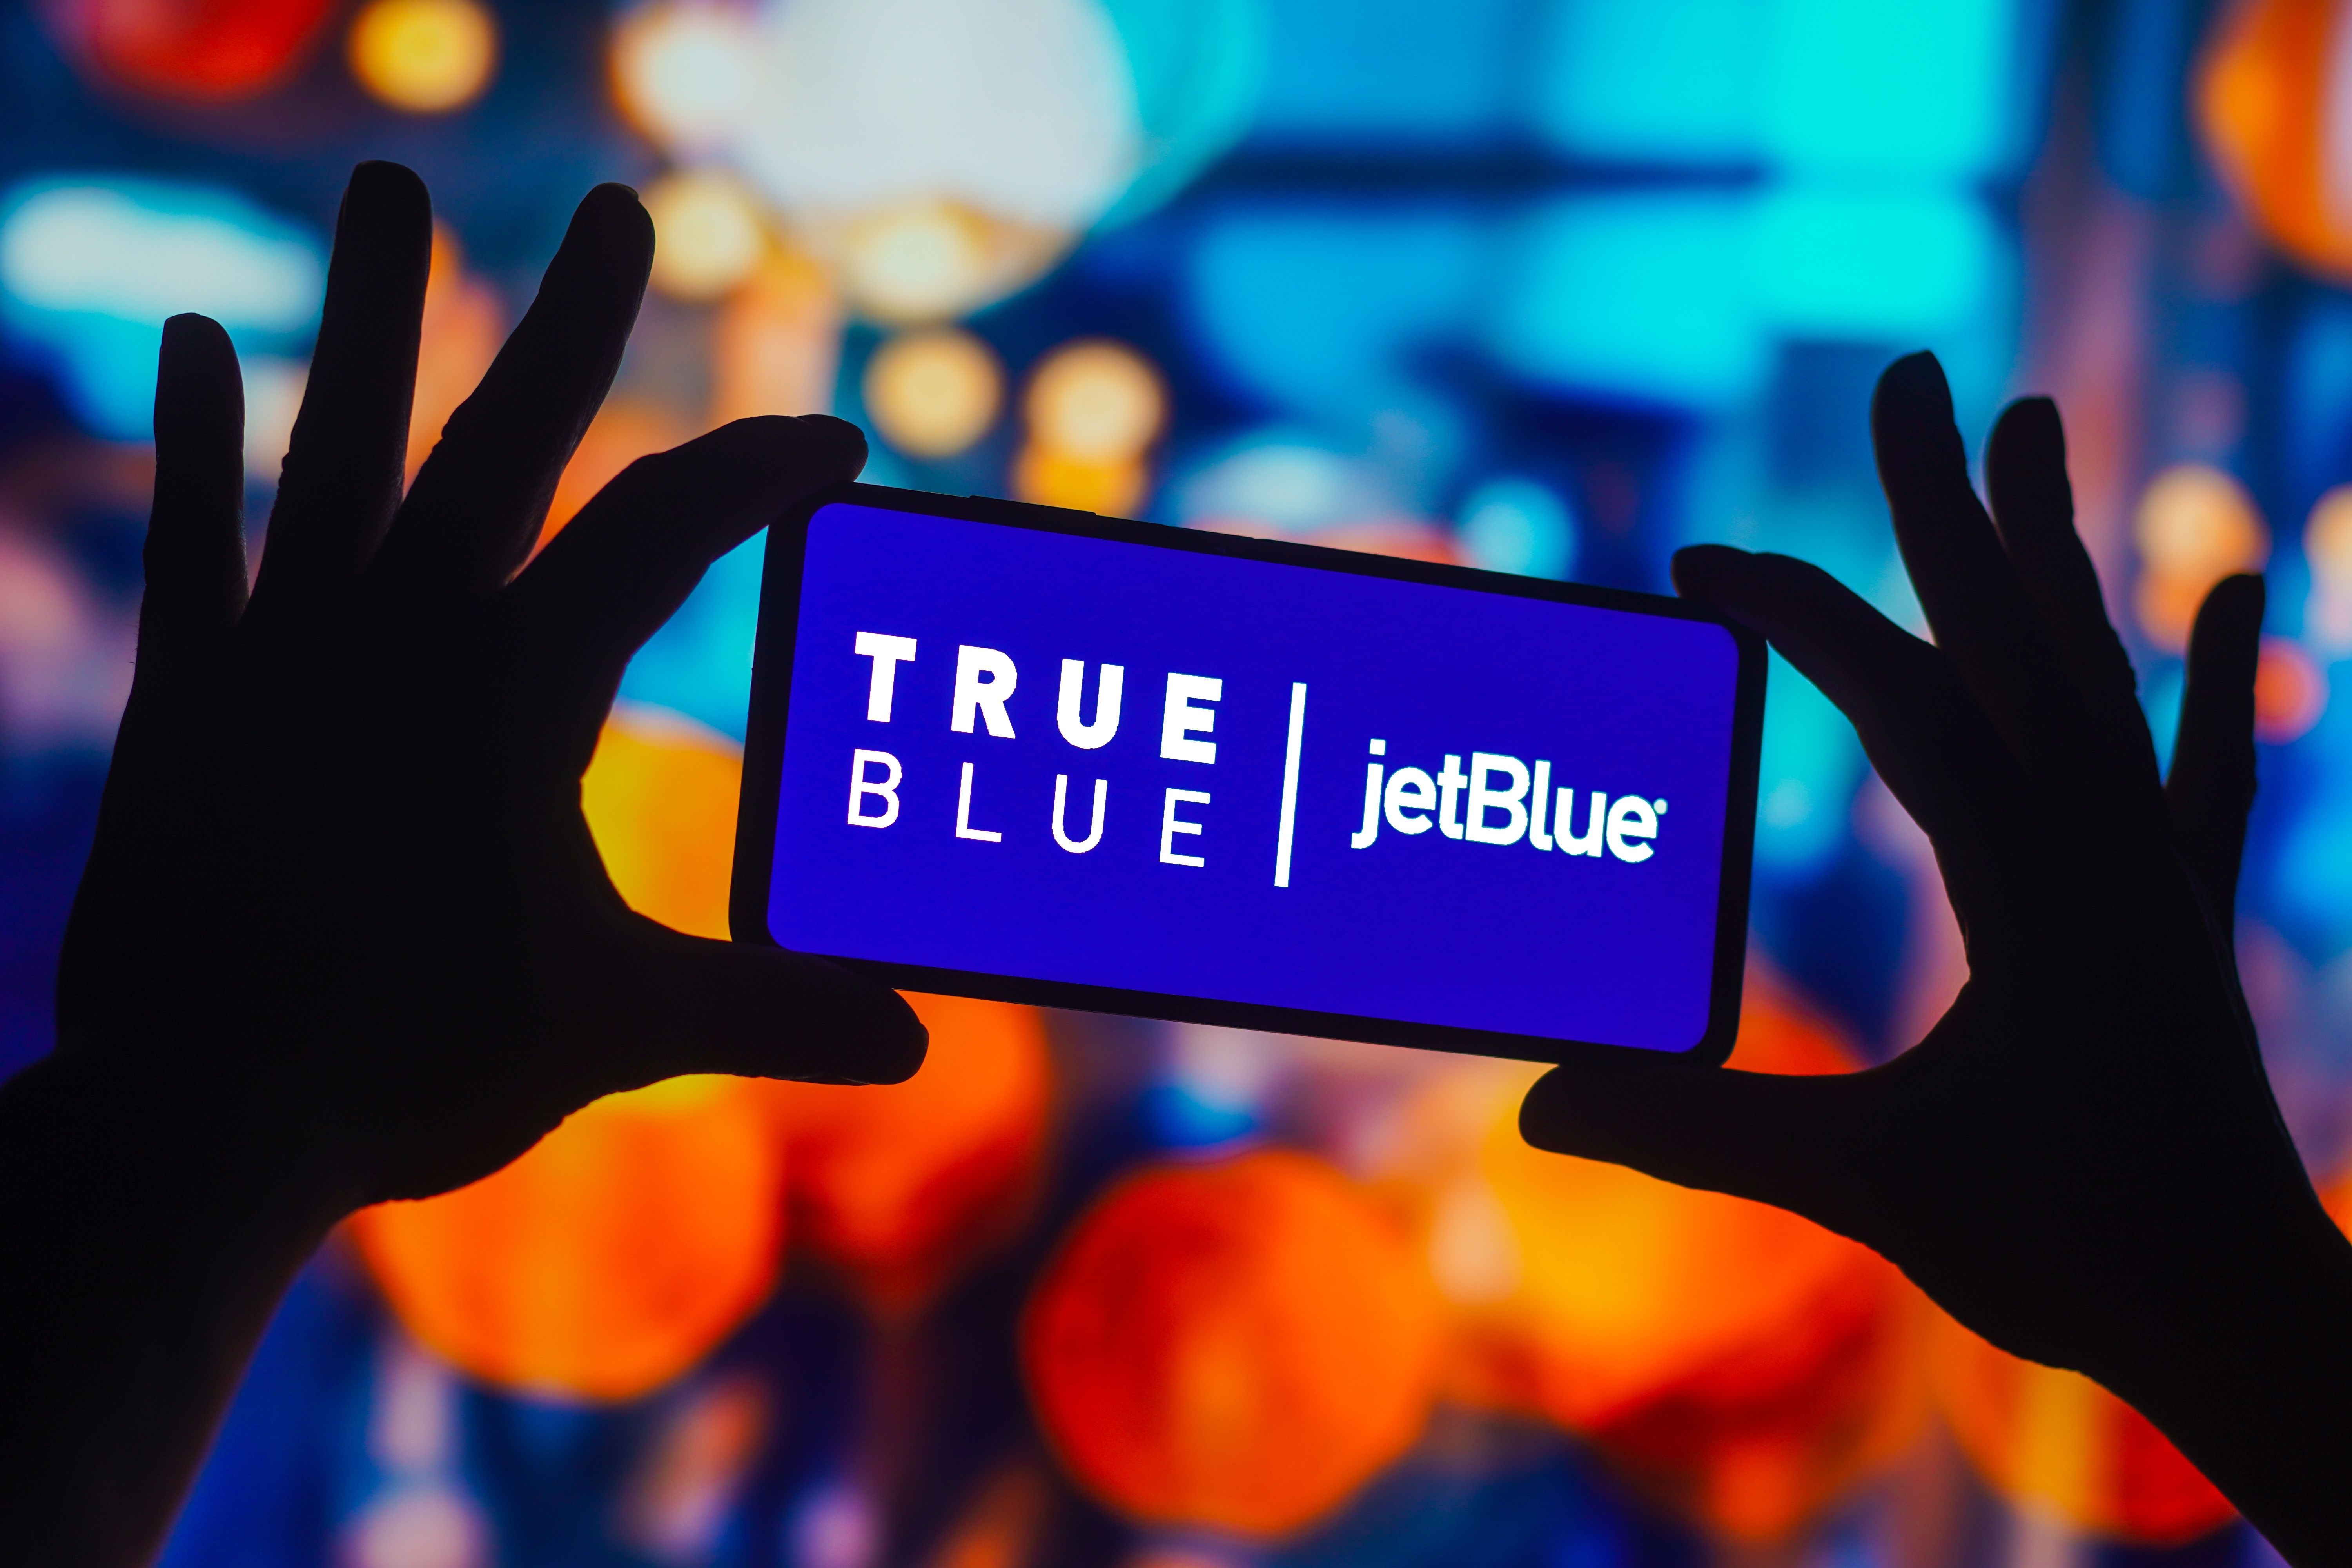 JetBlue trueblue